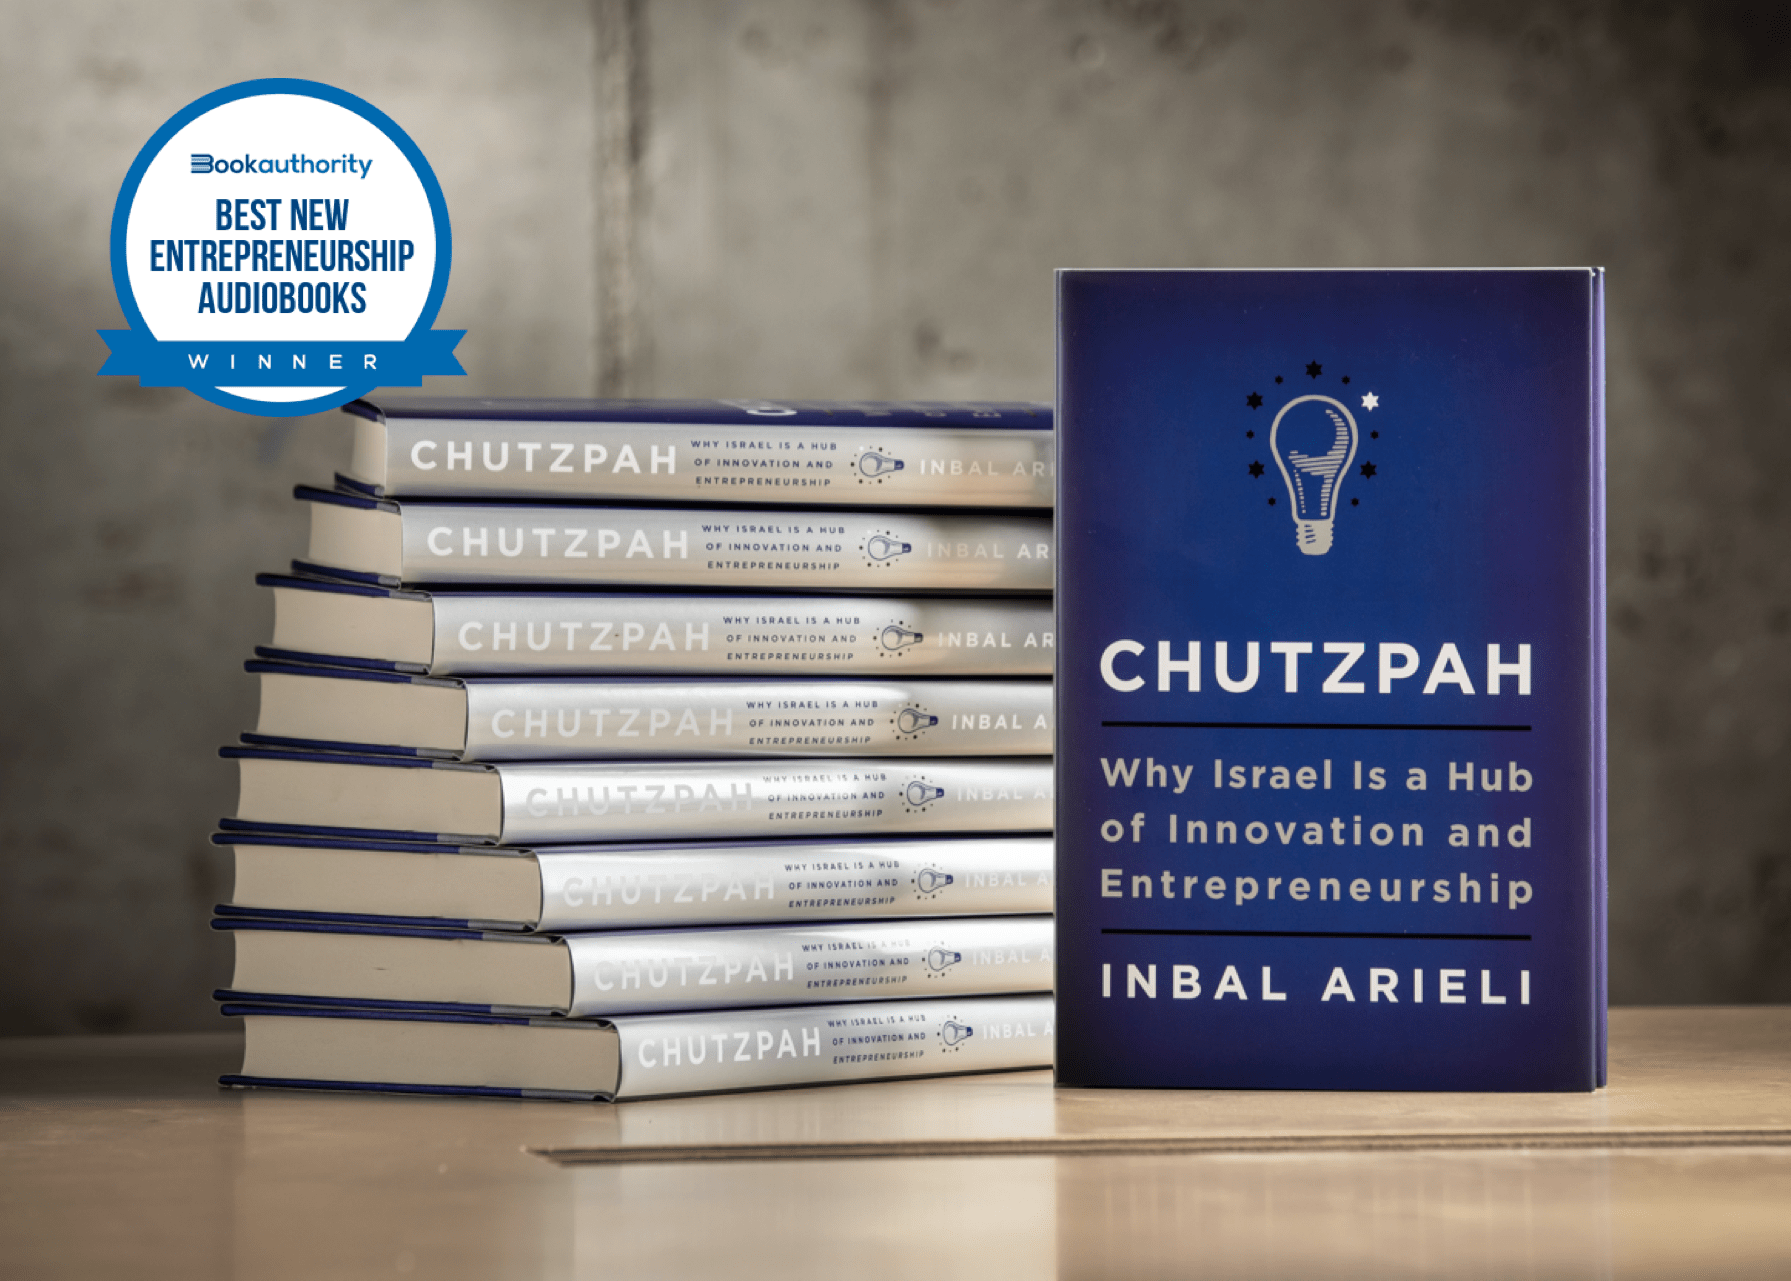 Chutzpah: Why Israel Is a Hub of Innovation and Entrepreneurship